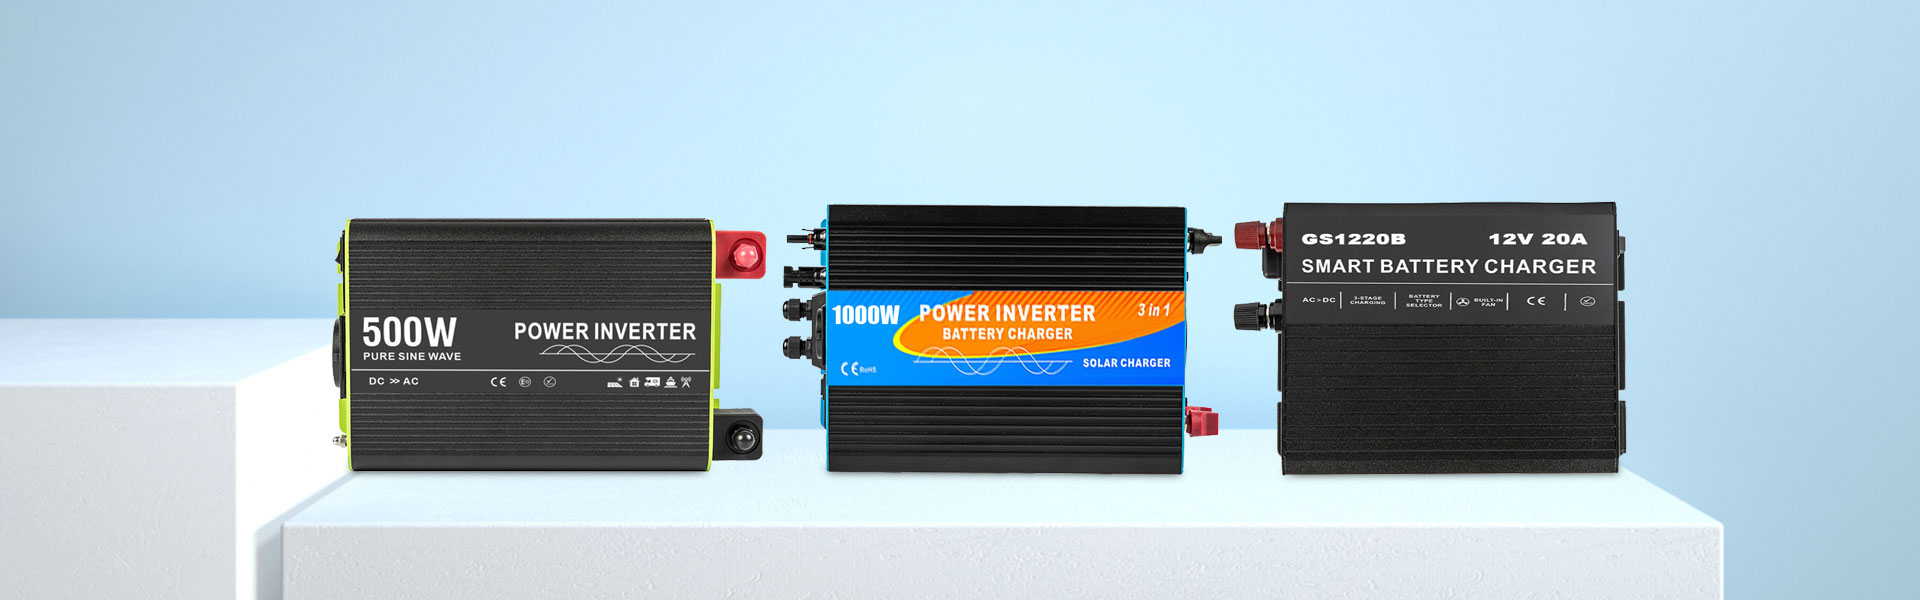 2500w Power Inverter